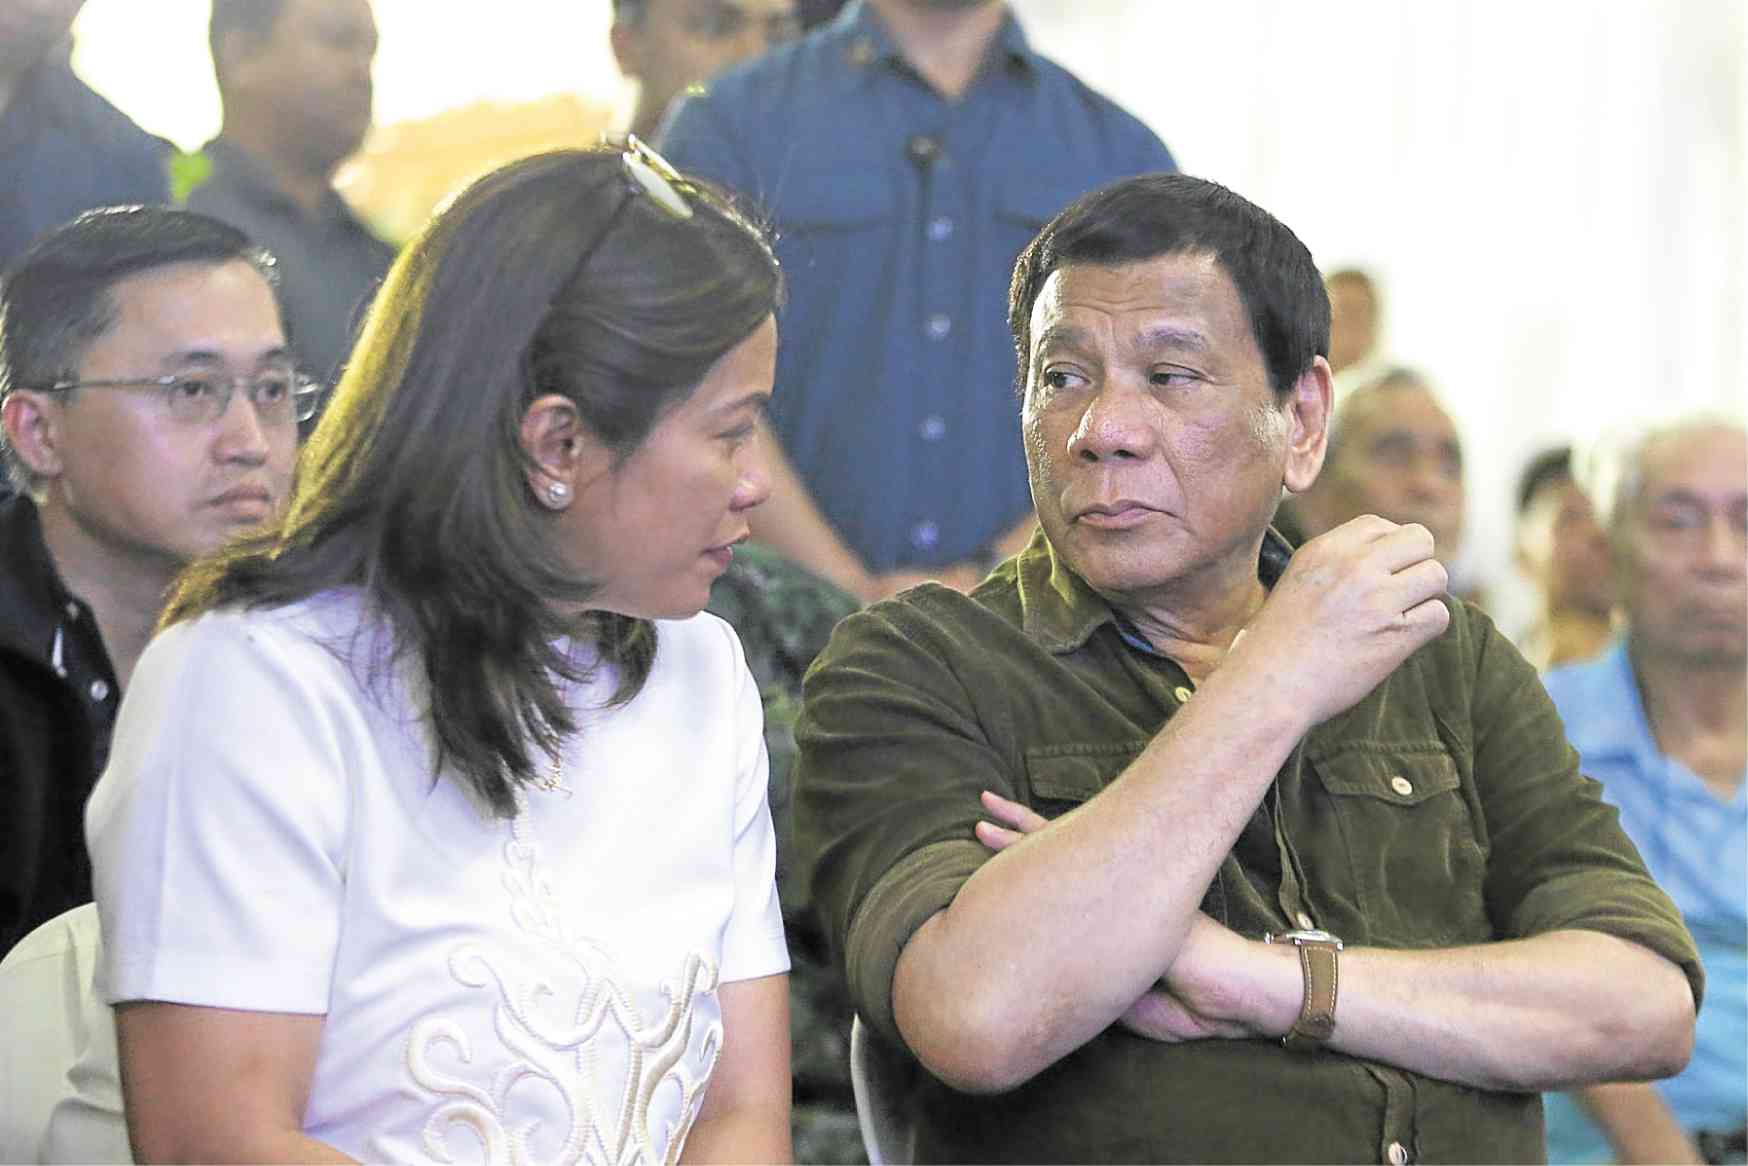 Duterte says he threatened an Albay mayor for harassing Batocabe's wife